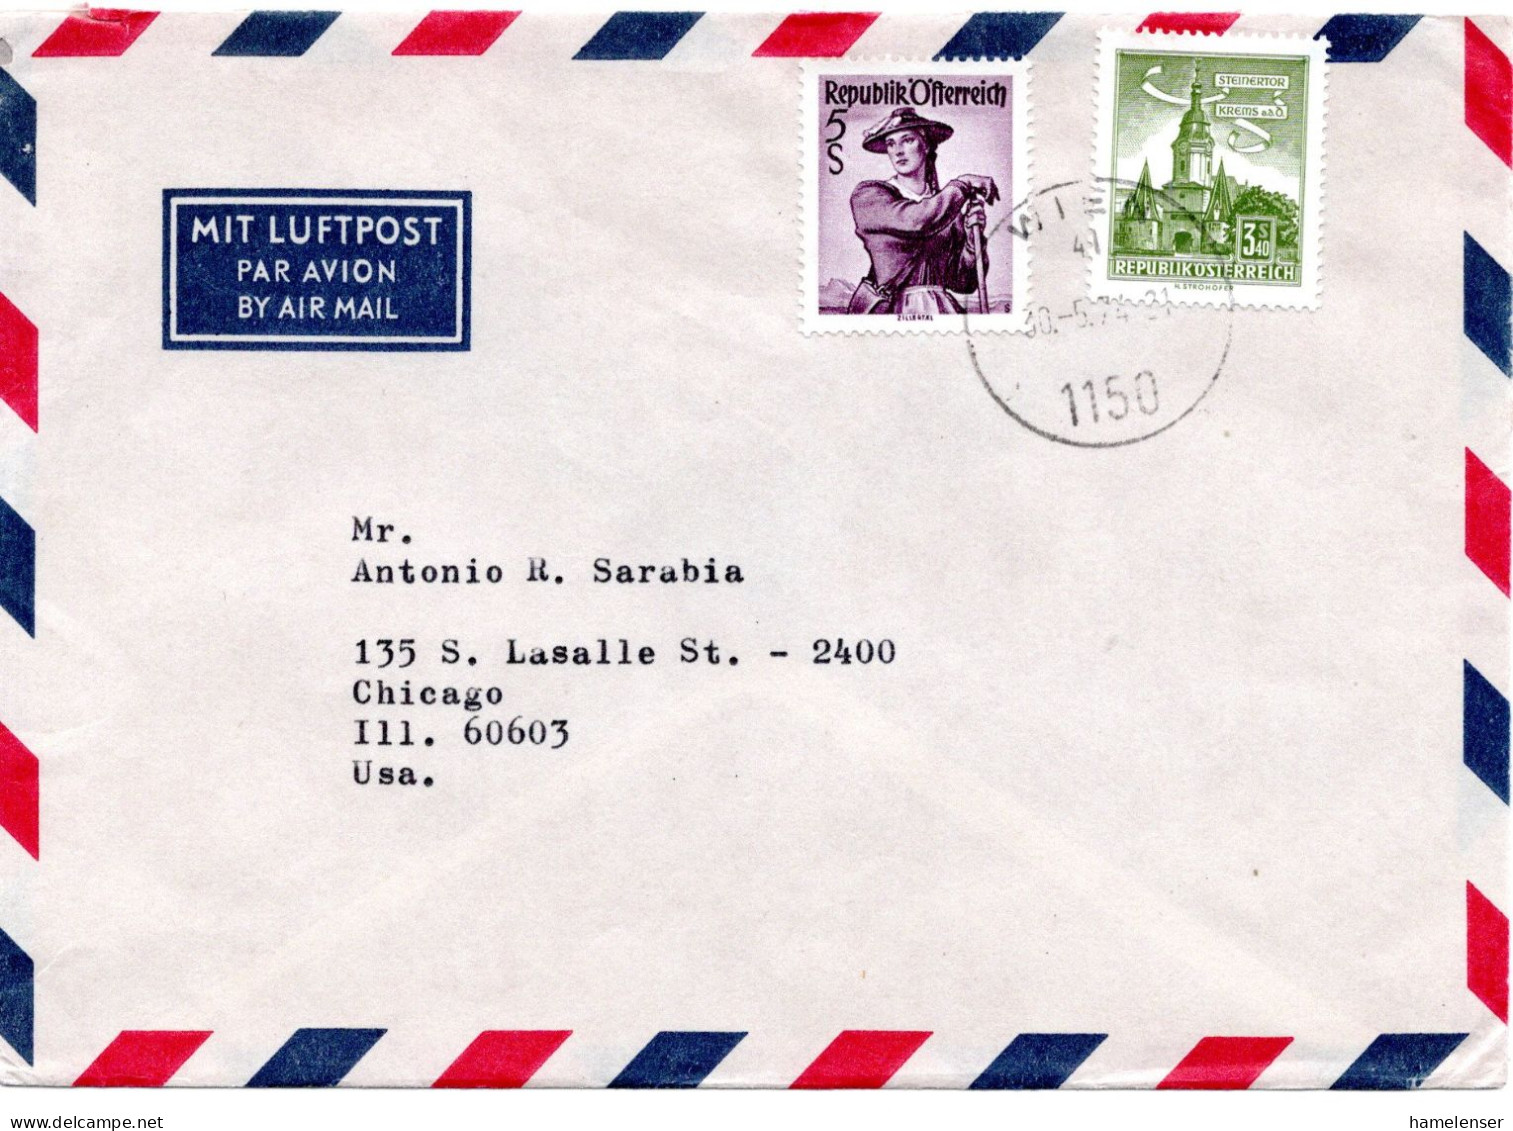 73935 - Österreich - 1974 - S5 Trachten MiF A LpBf WIEN -> Chicago, IL (USA) - Covers & Documents